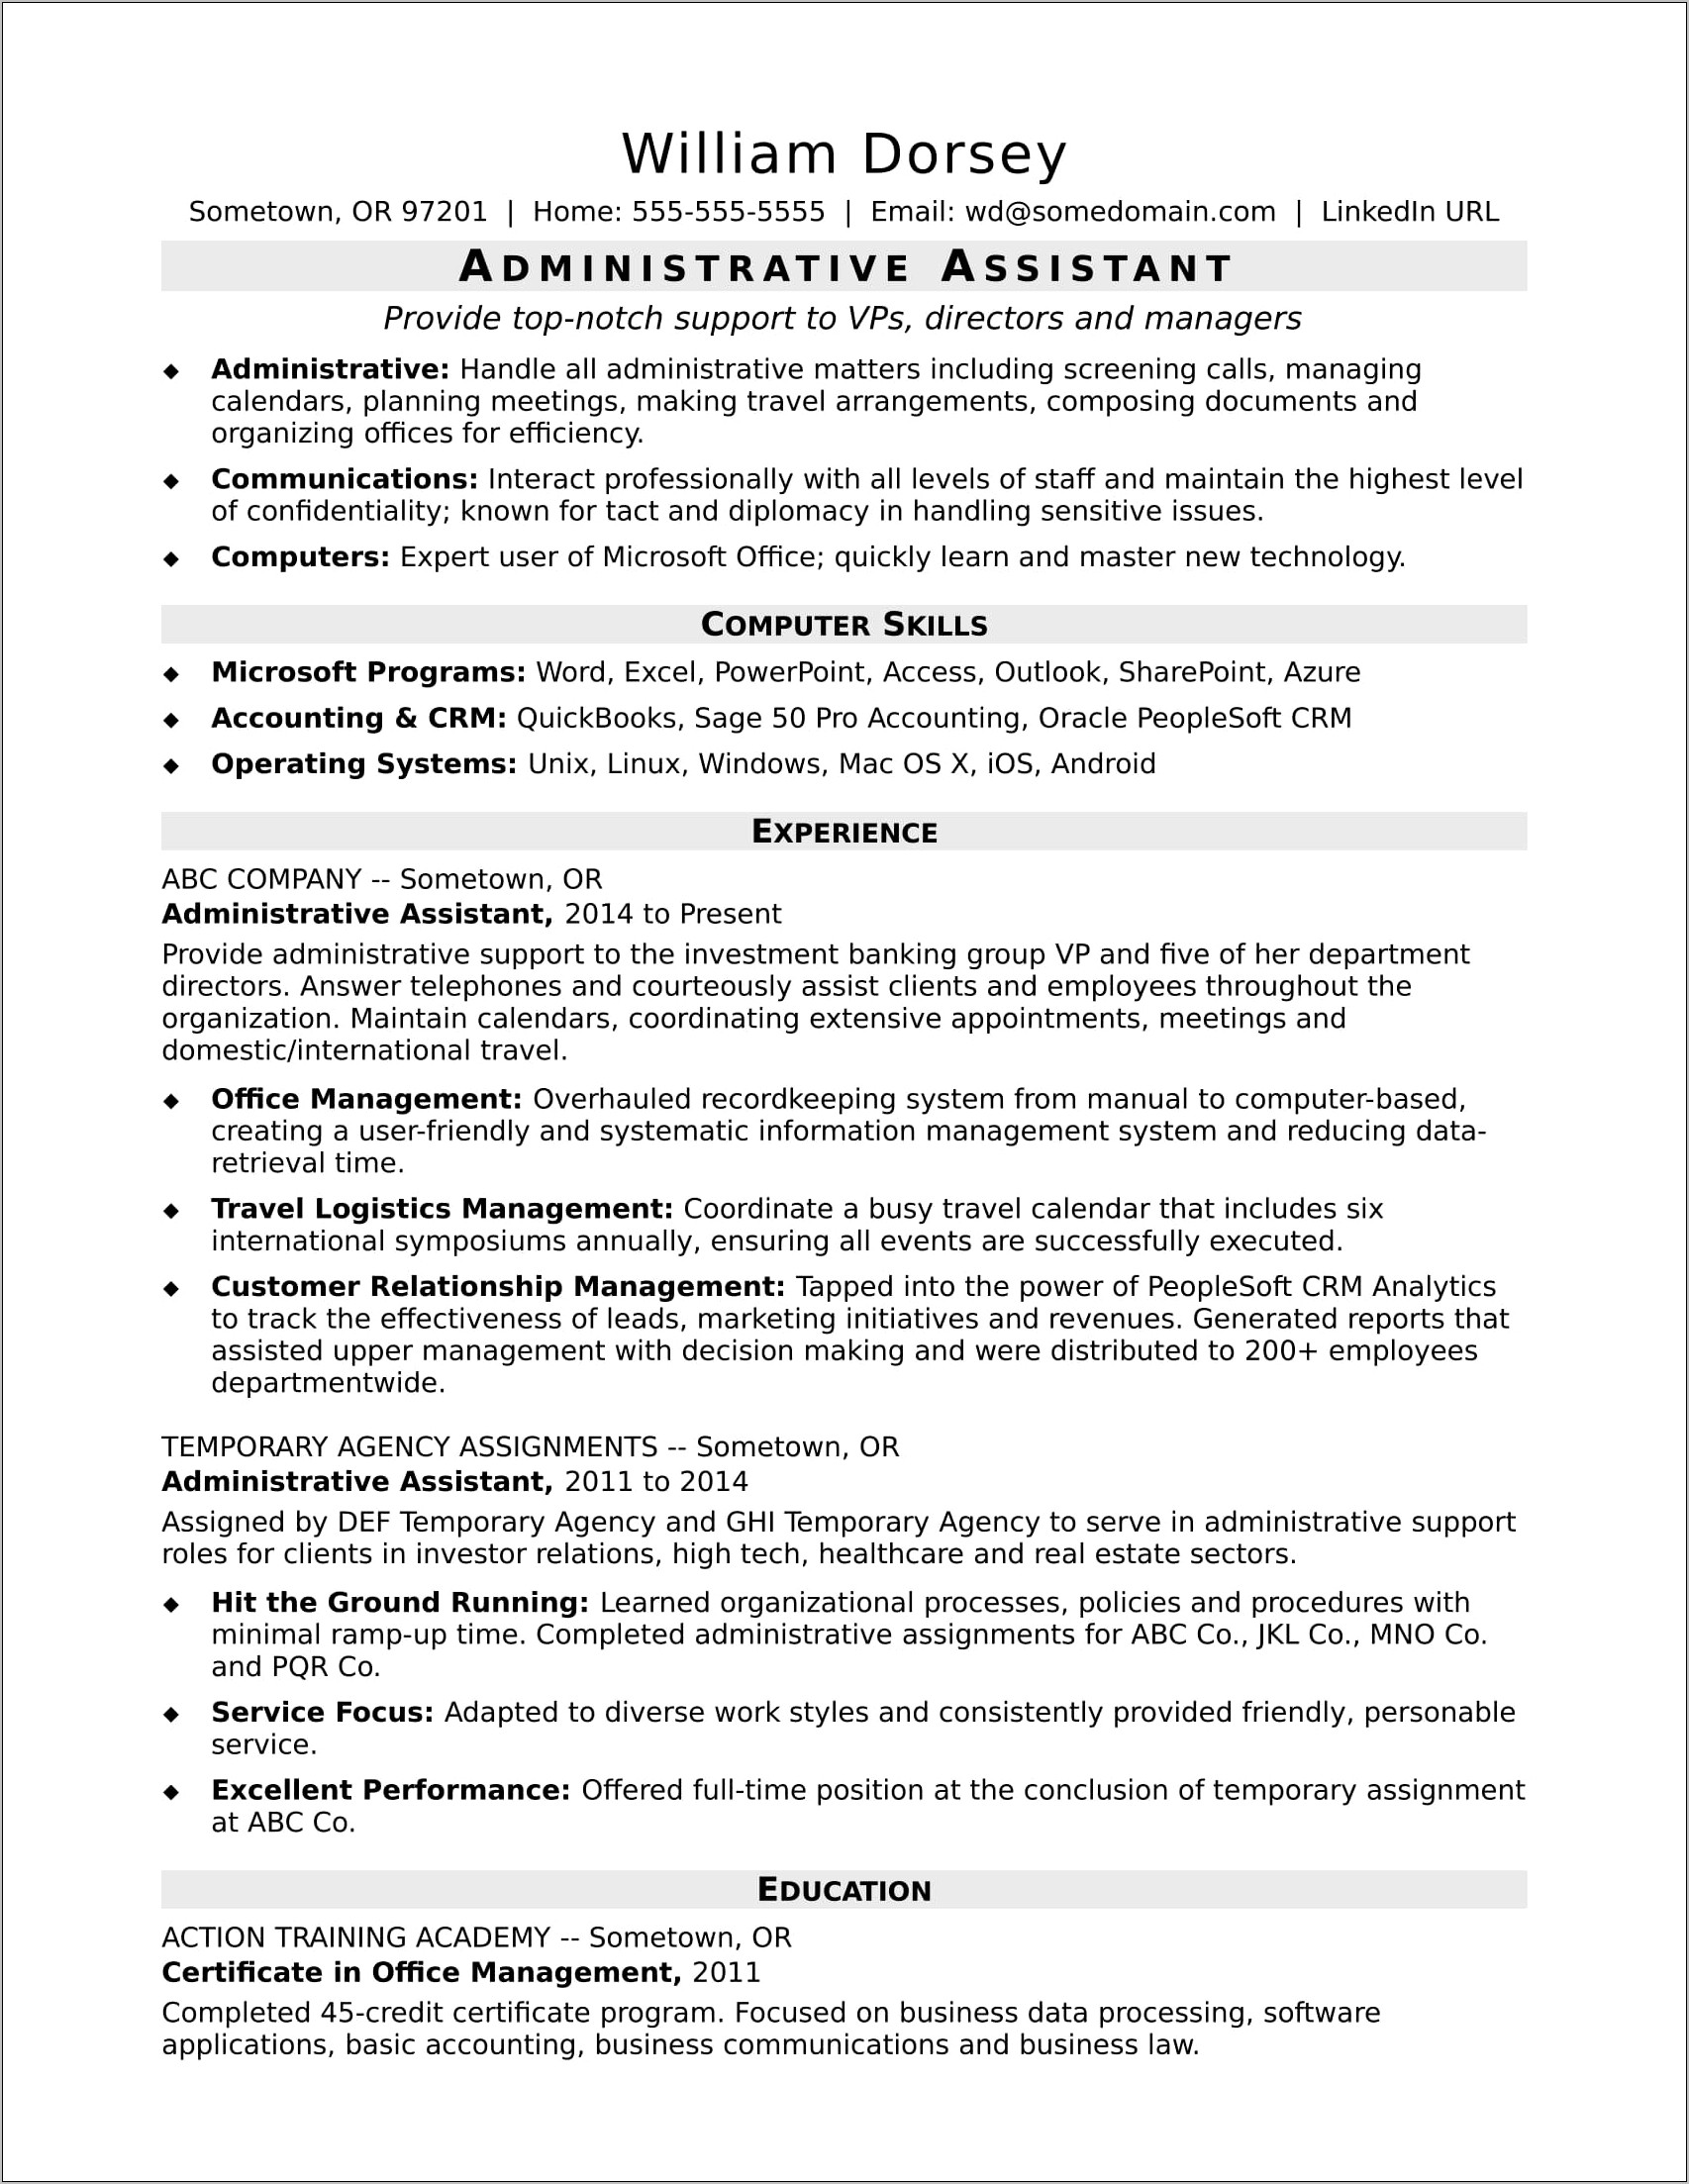 Skills Based Administrative Assistant Resume